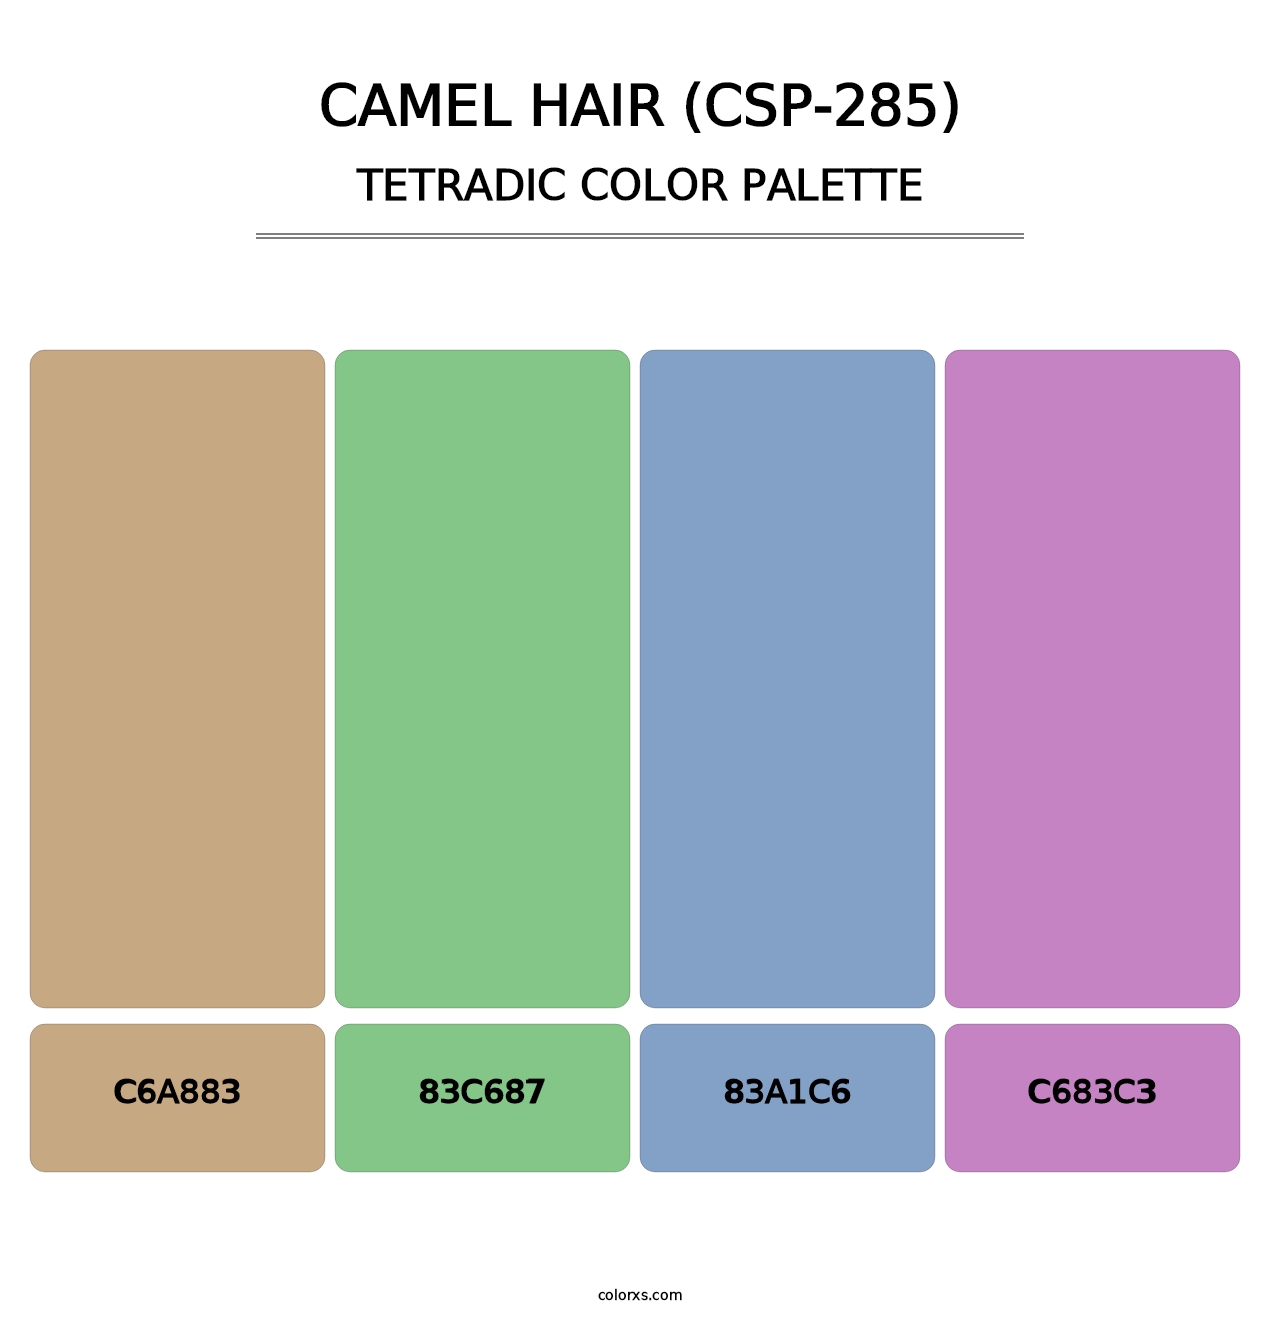 Camel Hair (CSP-285) - Tetradic Color Palette